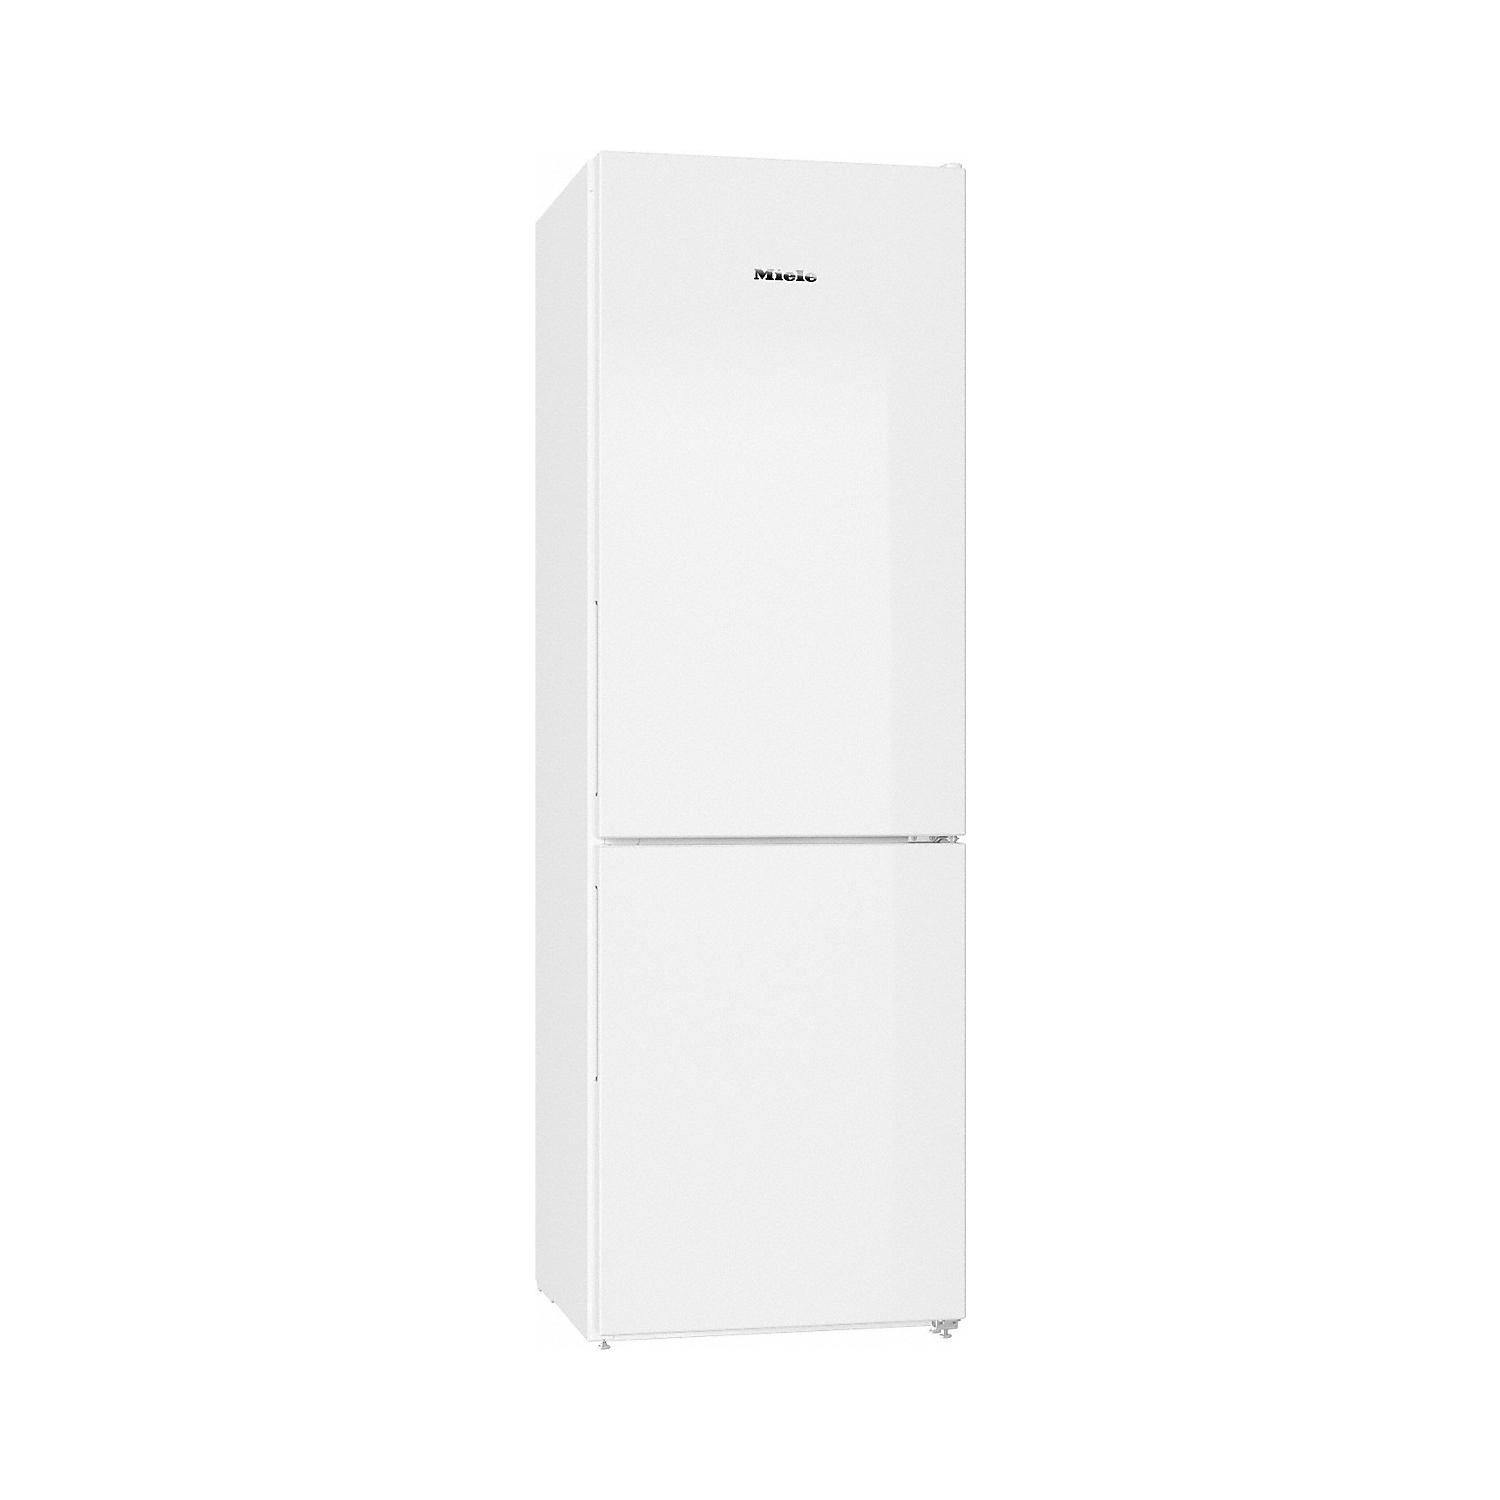 Miele Freestanding Fridge Freezer, 60cm Wide, White - 0